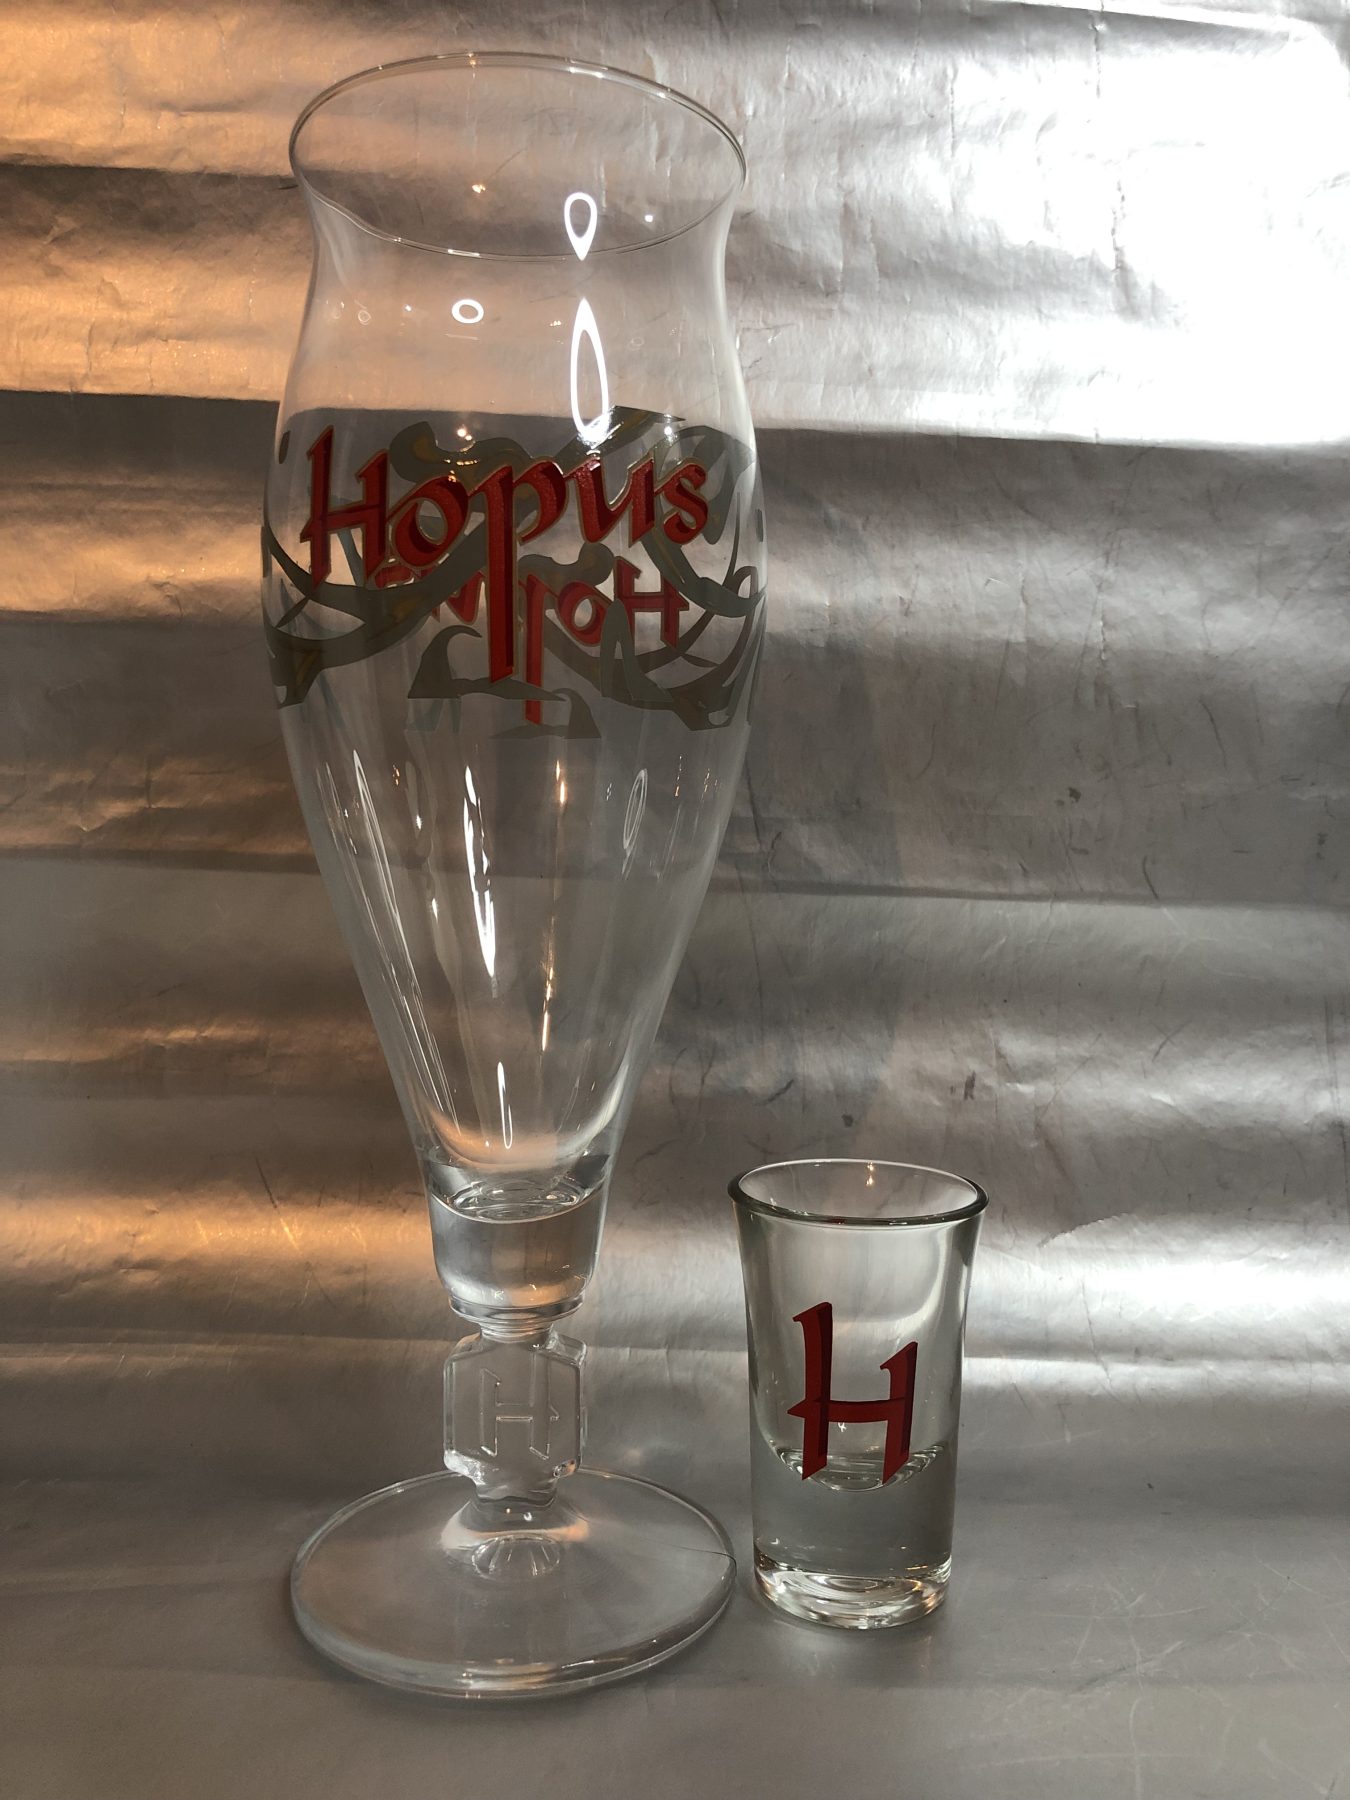 Hopus Blond beer glass